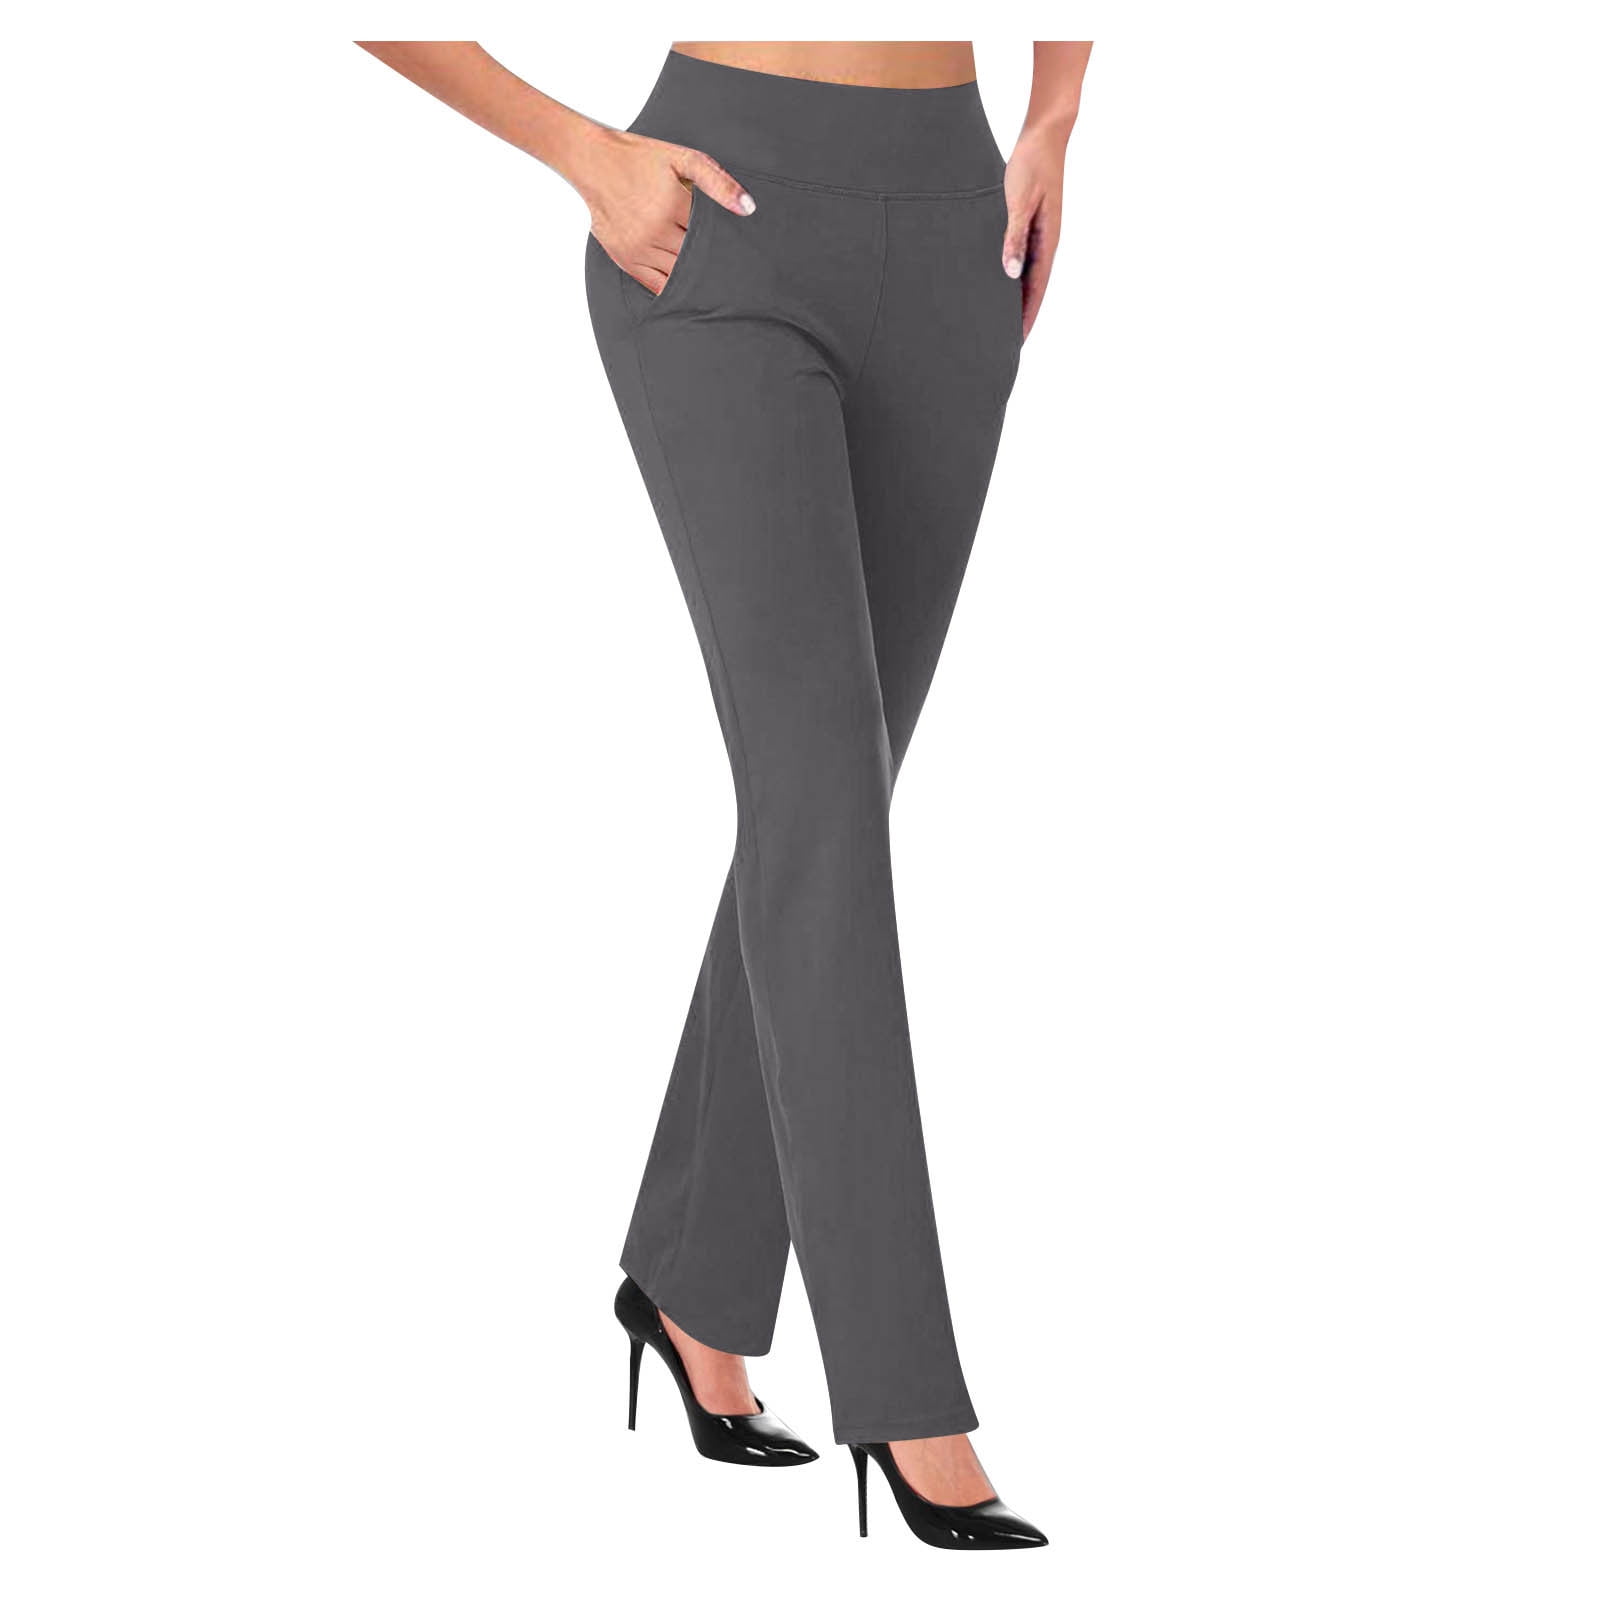 Hfyihgf Women's Yoga Dress Pants Stretchy Work Slacks Business Casual  Straight-Leg Bootcut Pull on Trousers(Black,L) 